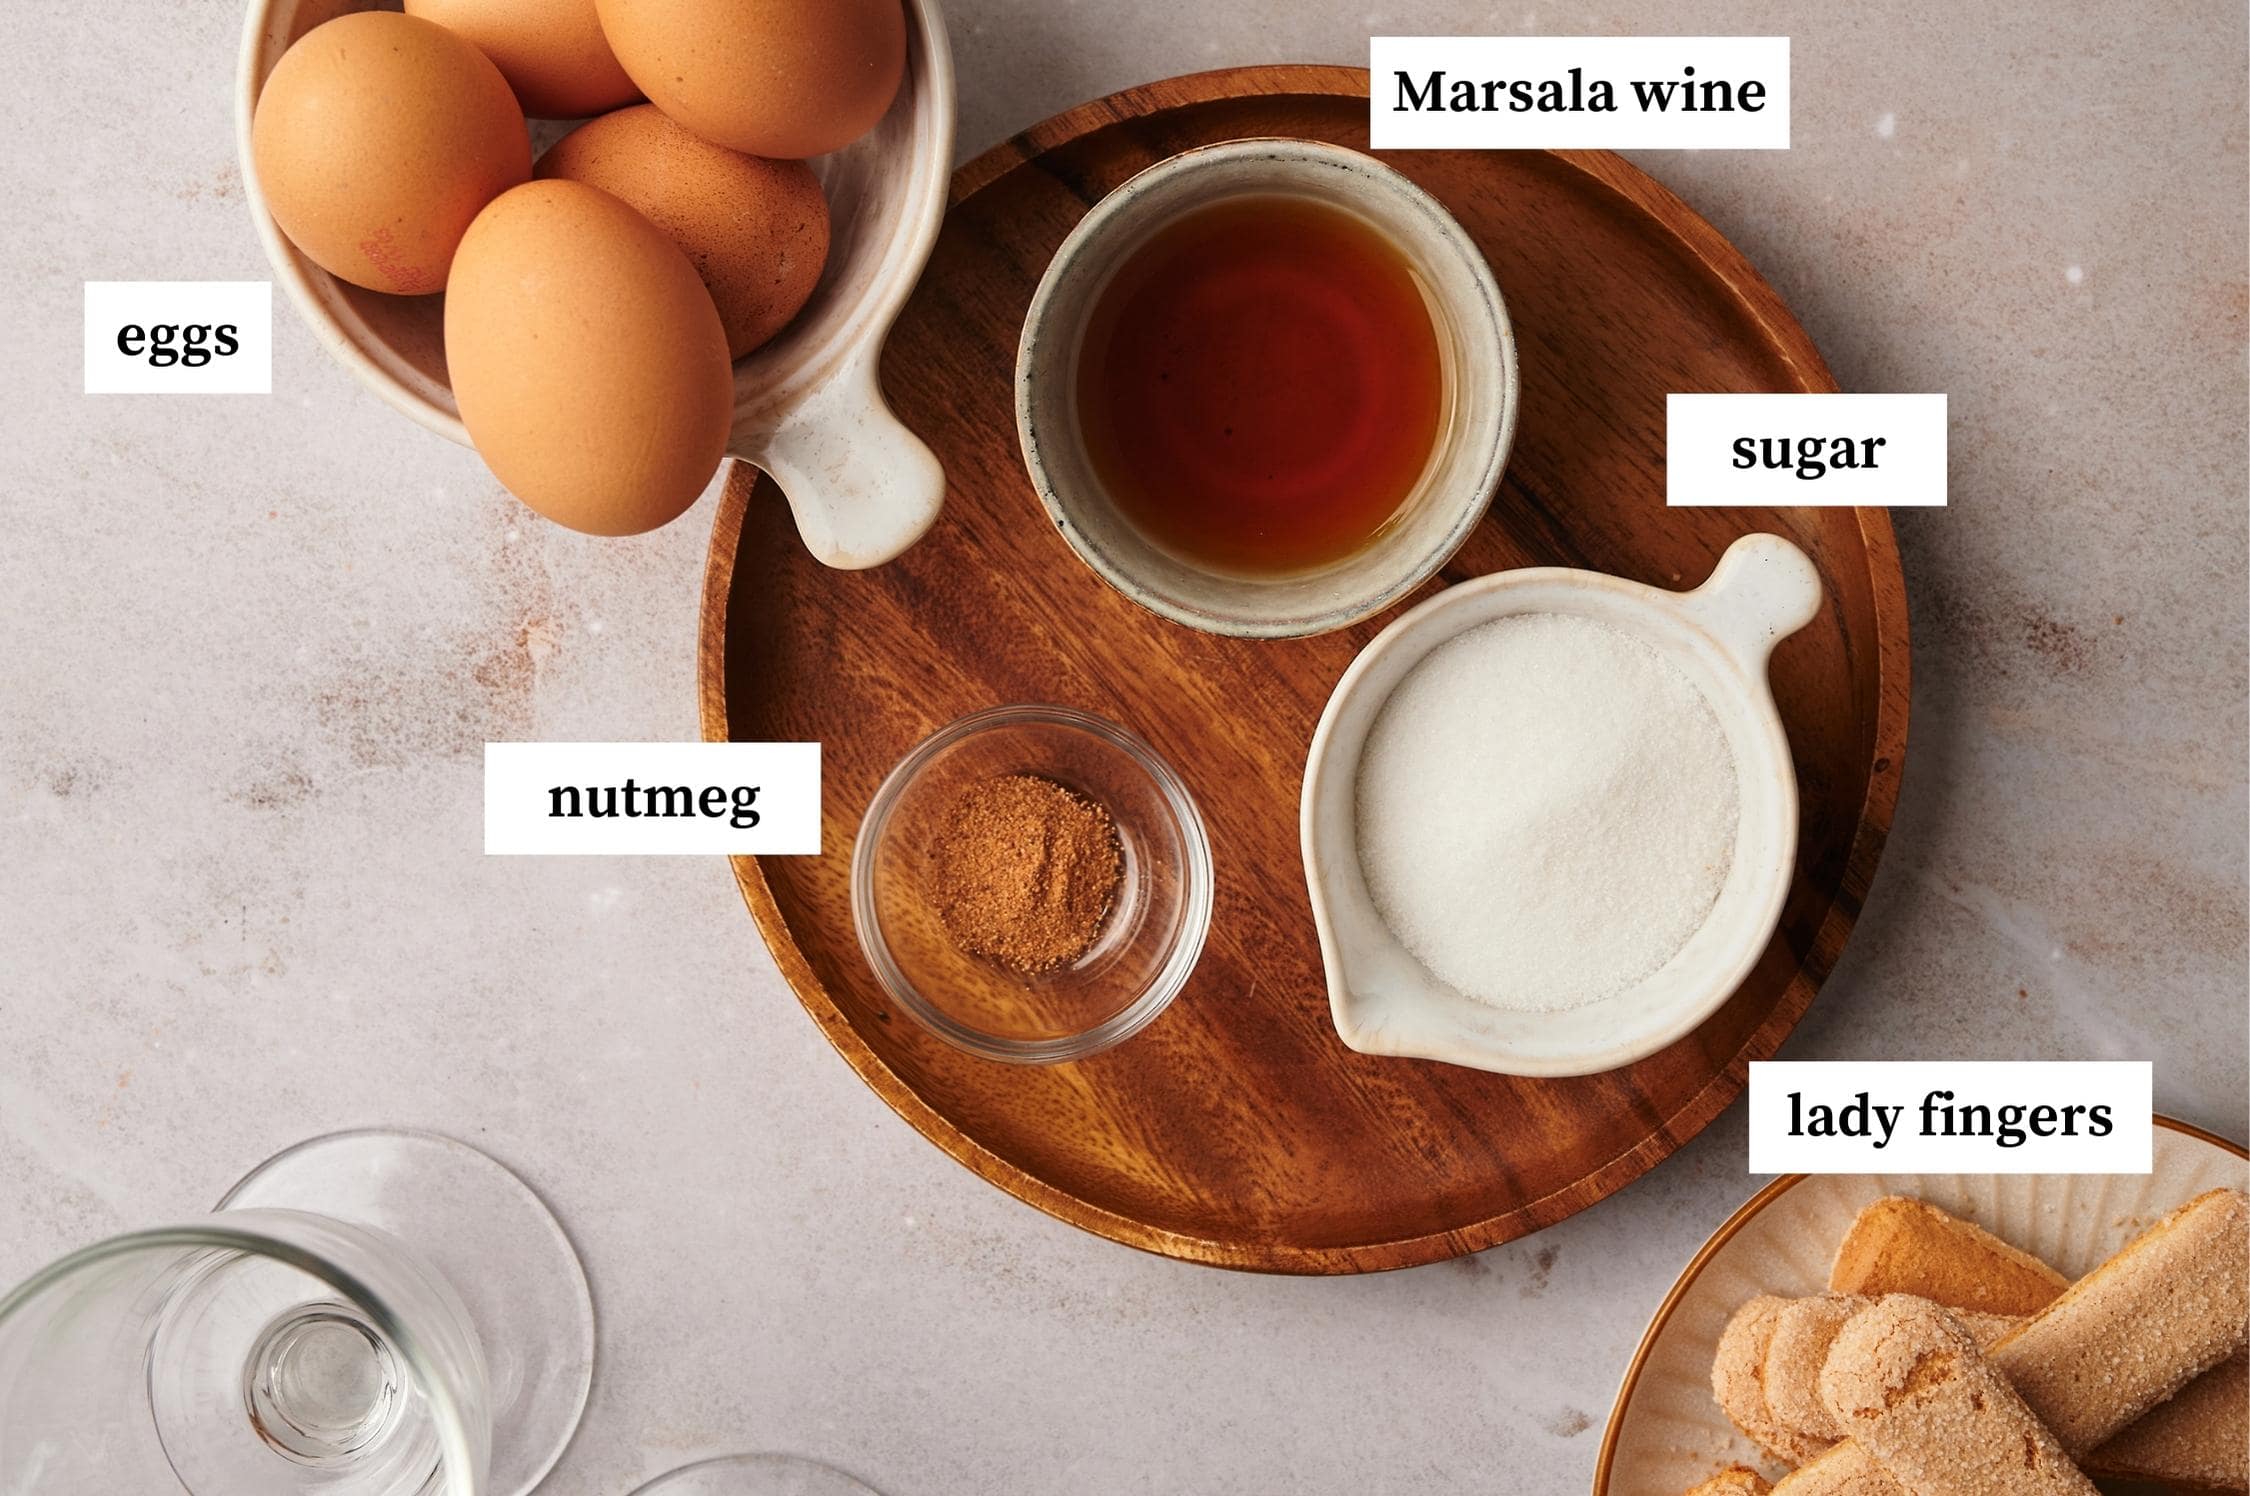 ingredients for zabaglione recipe on a table: eggs, nutmeg, sugar, lady fingers, marsala wine